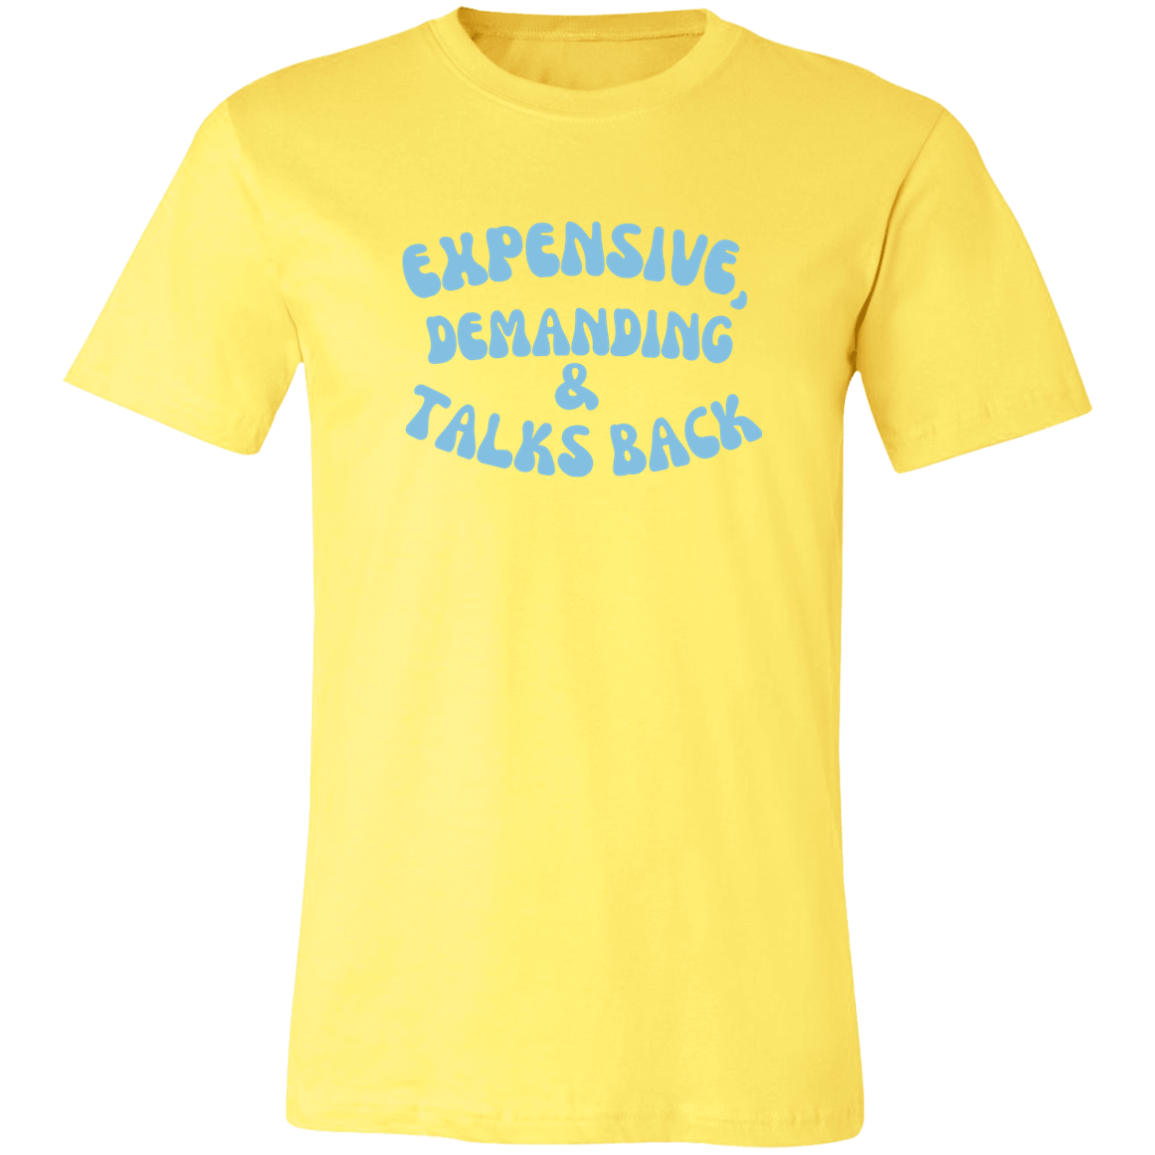 Expensive, Demanding & Talks BackShirt